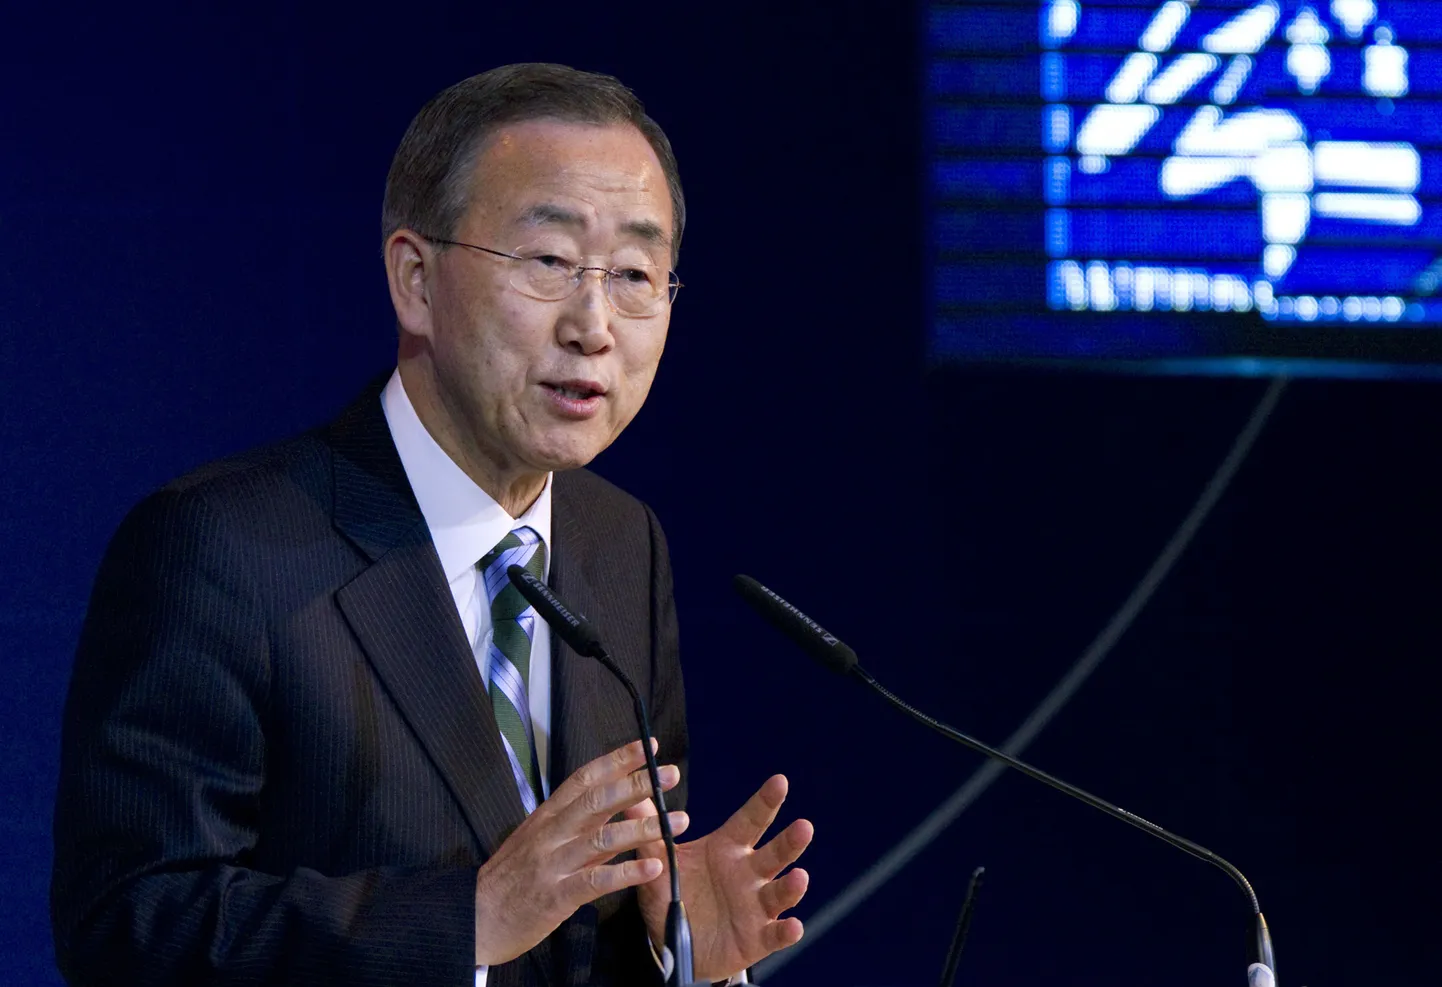 ÜRO peasekretär Ban Ki-moon.